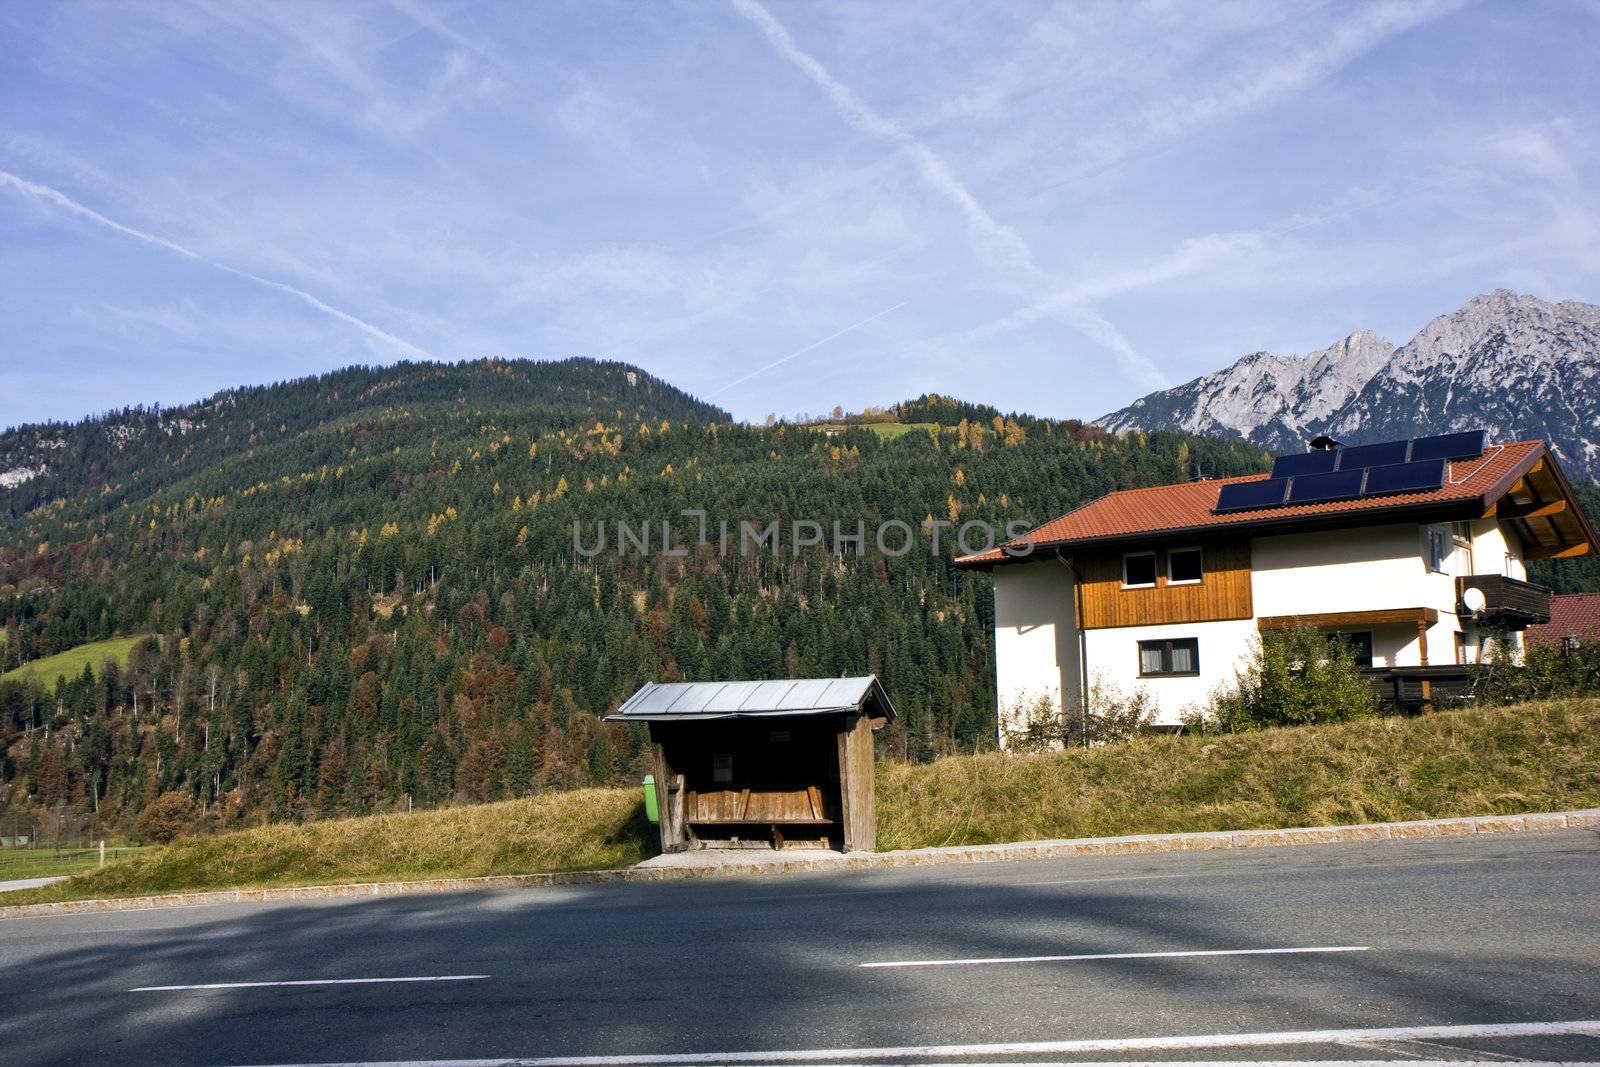 A small alpine Austrian village